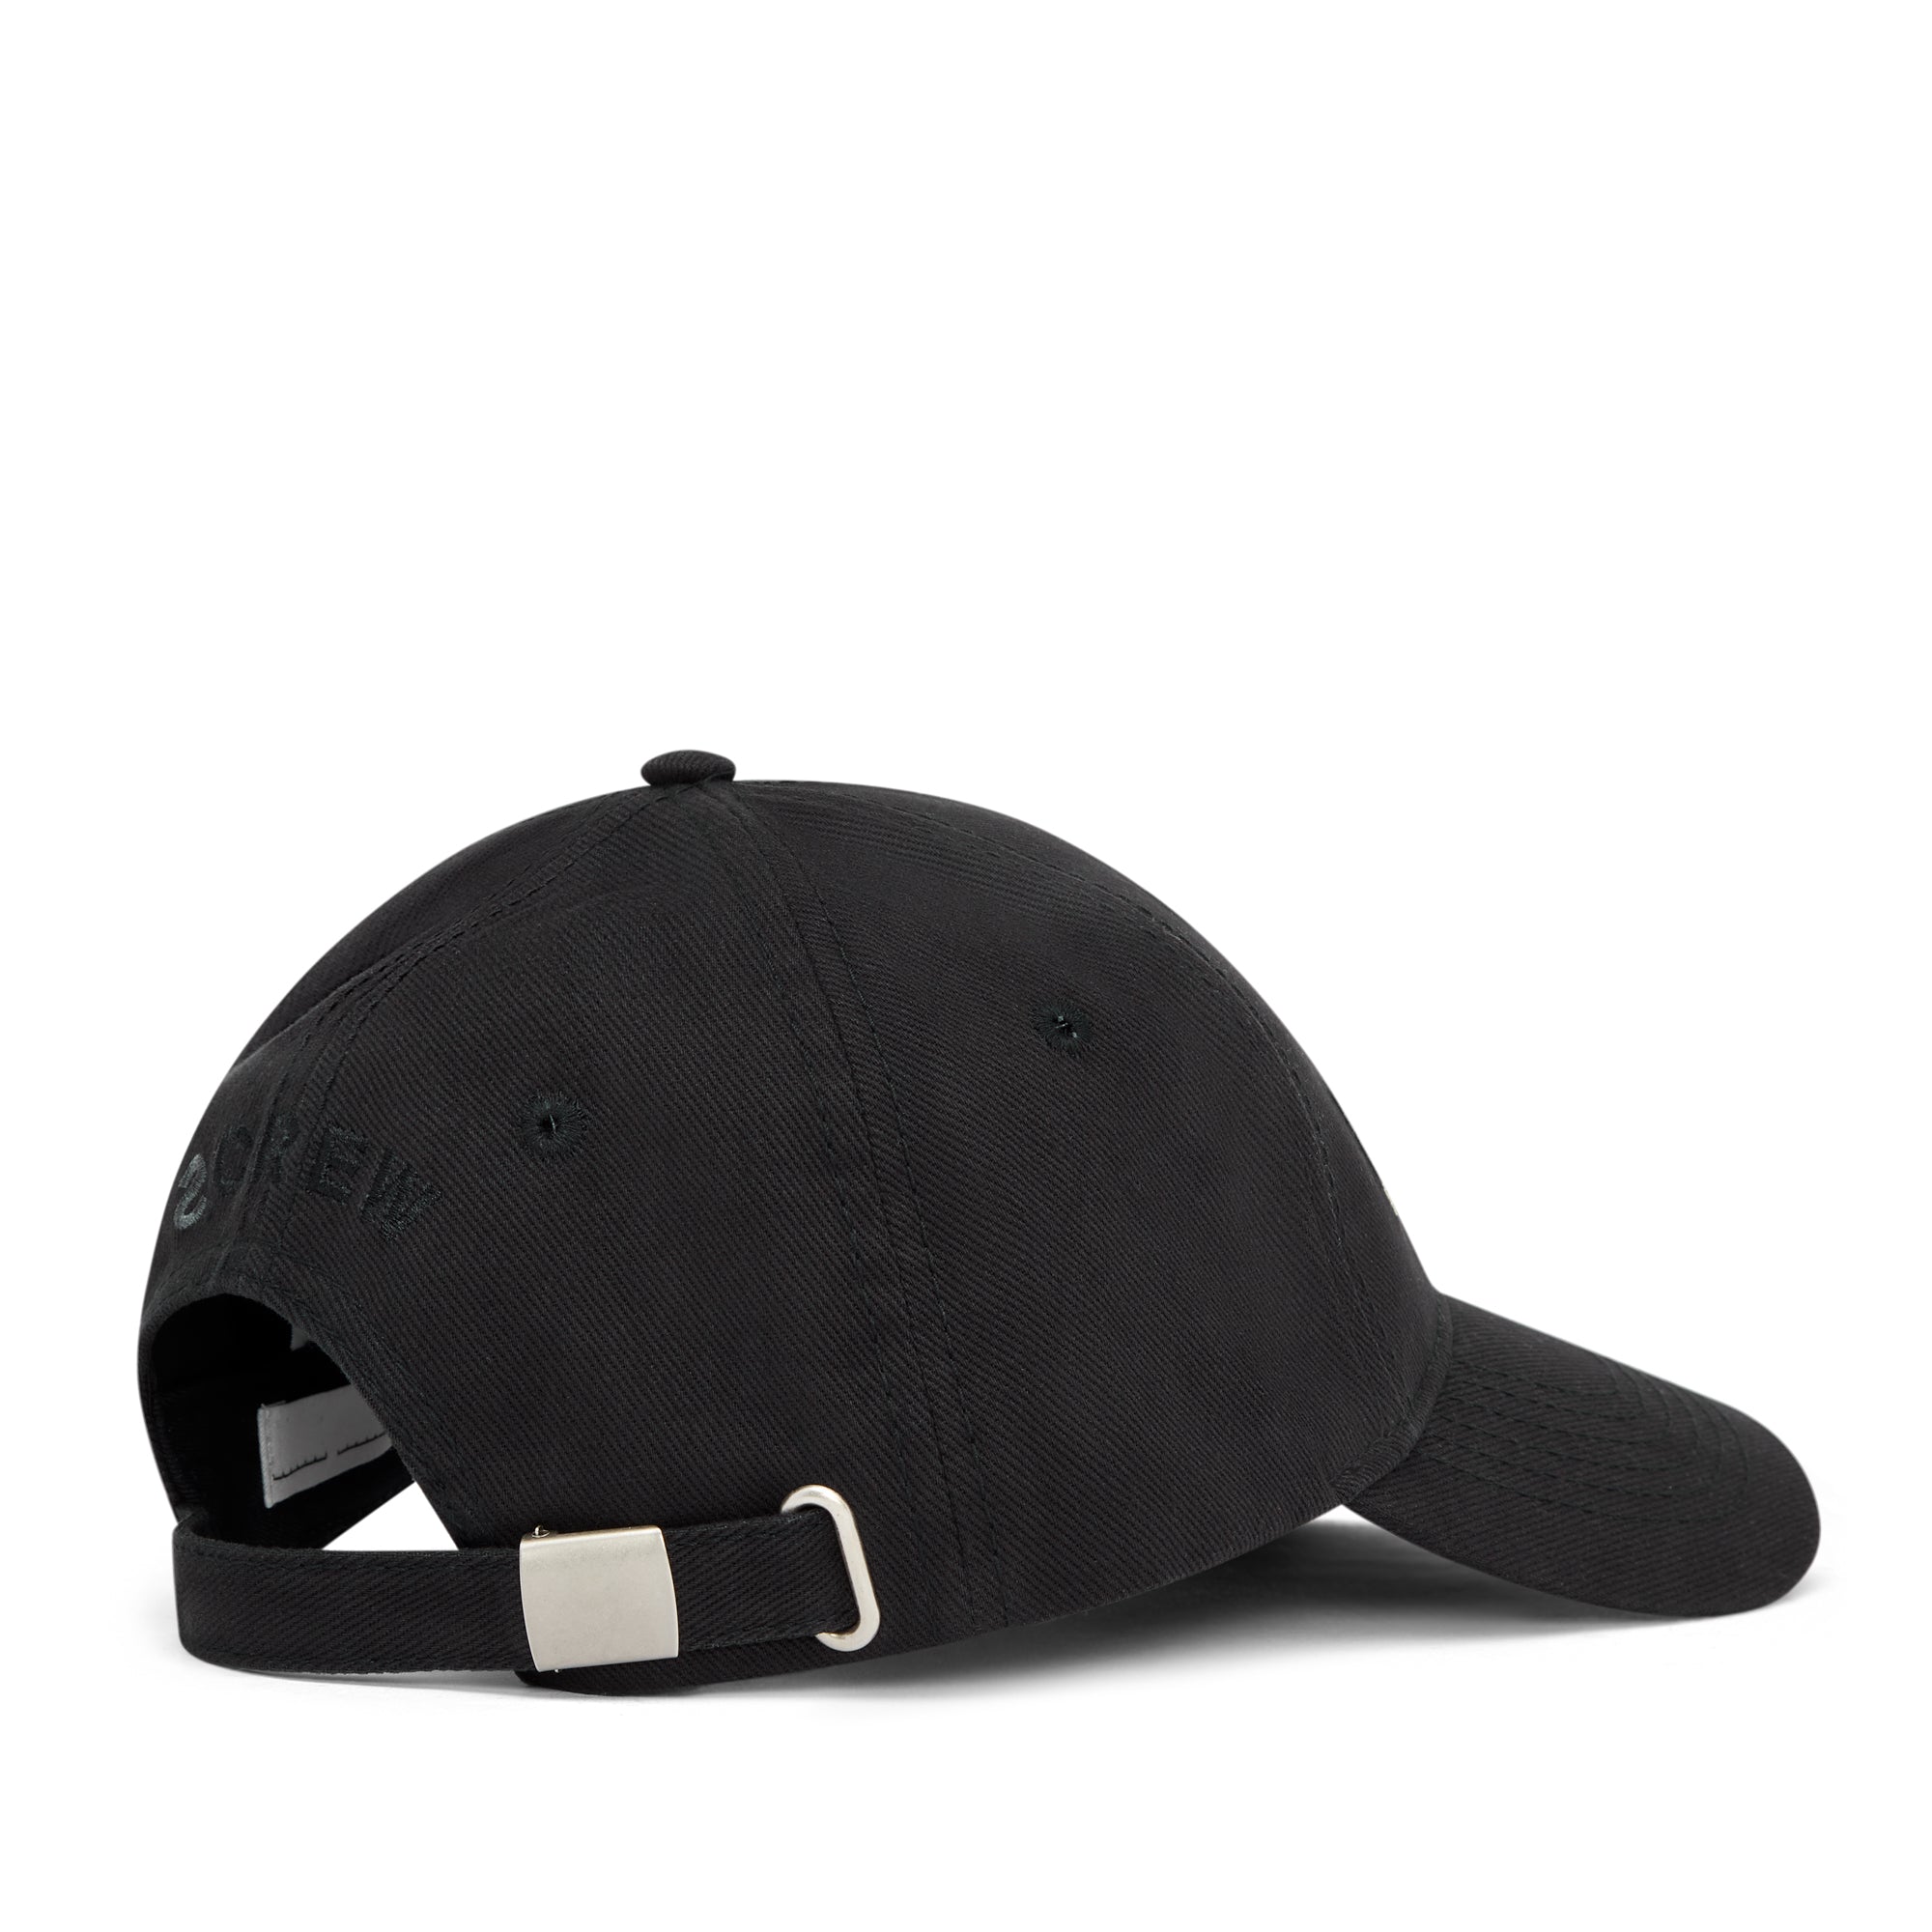 Random Identities - Men’s Sponsored Baseball Cap - (Black) view 3